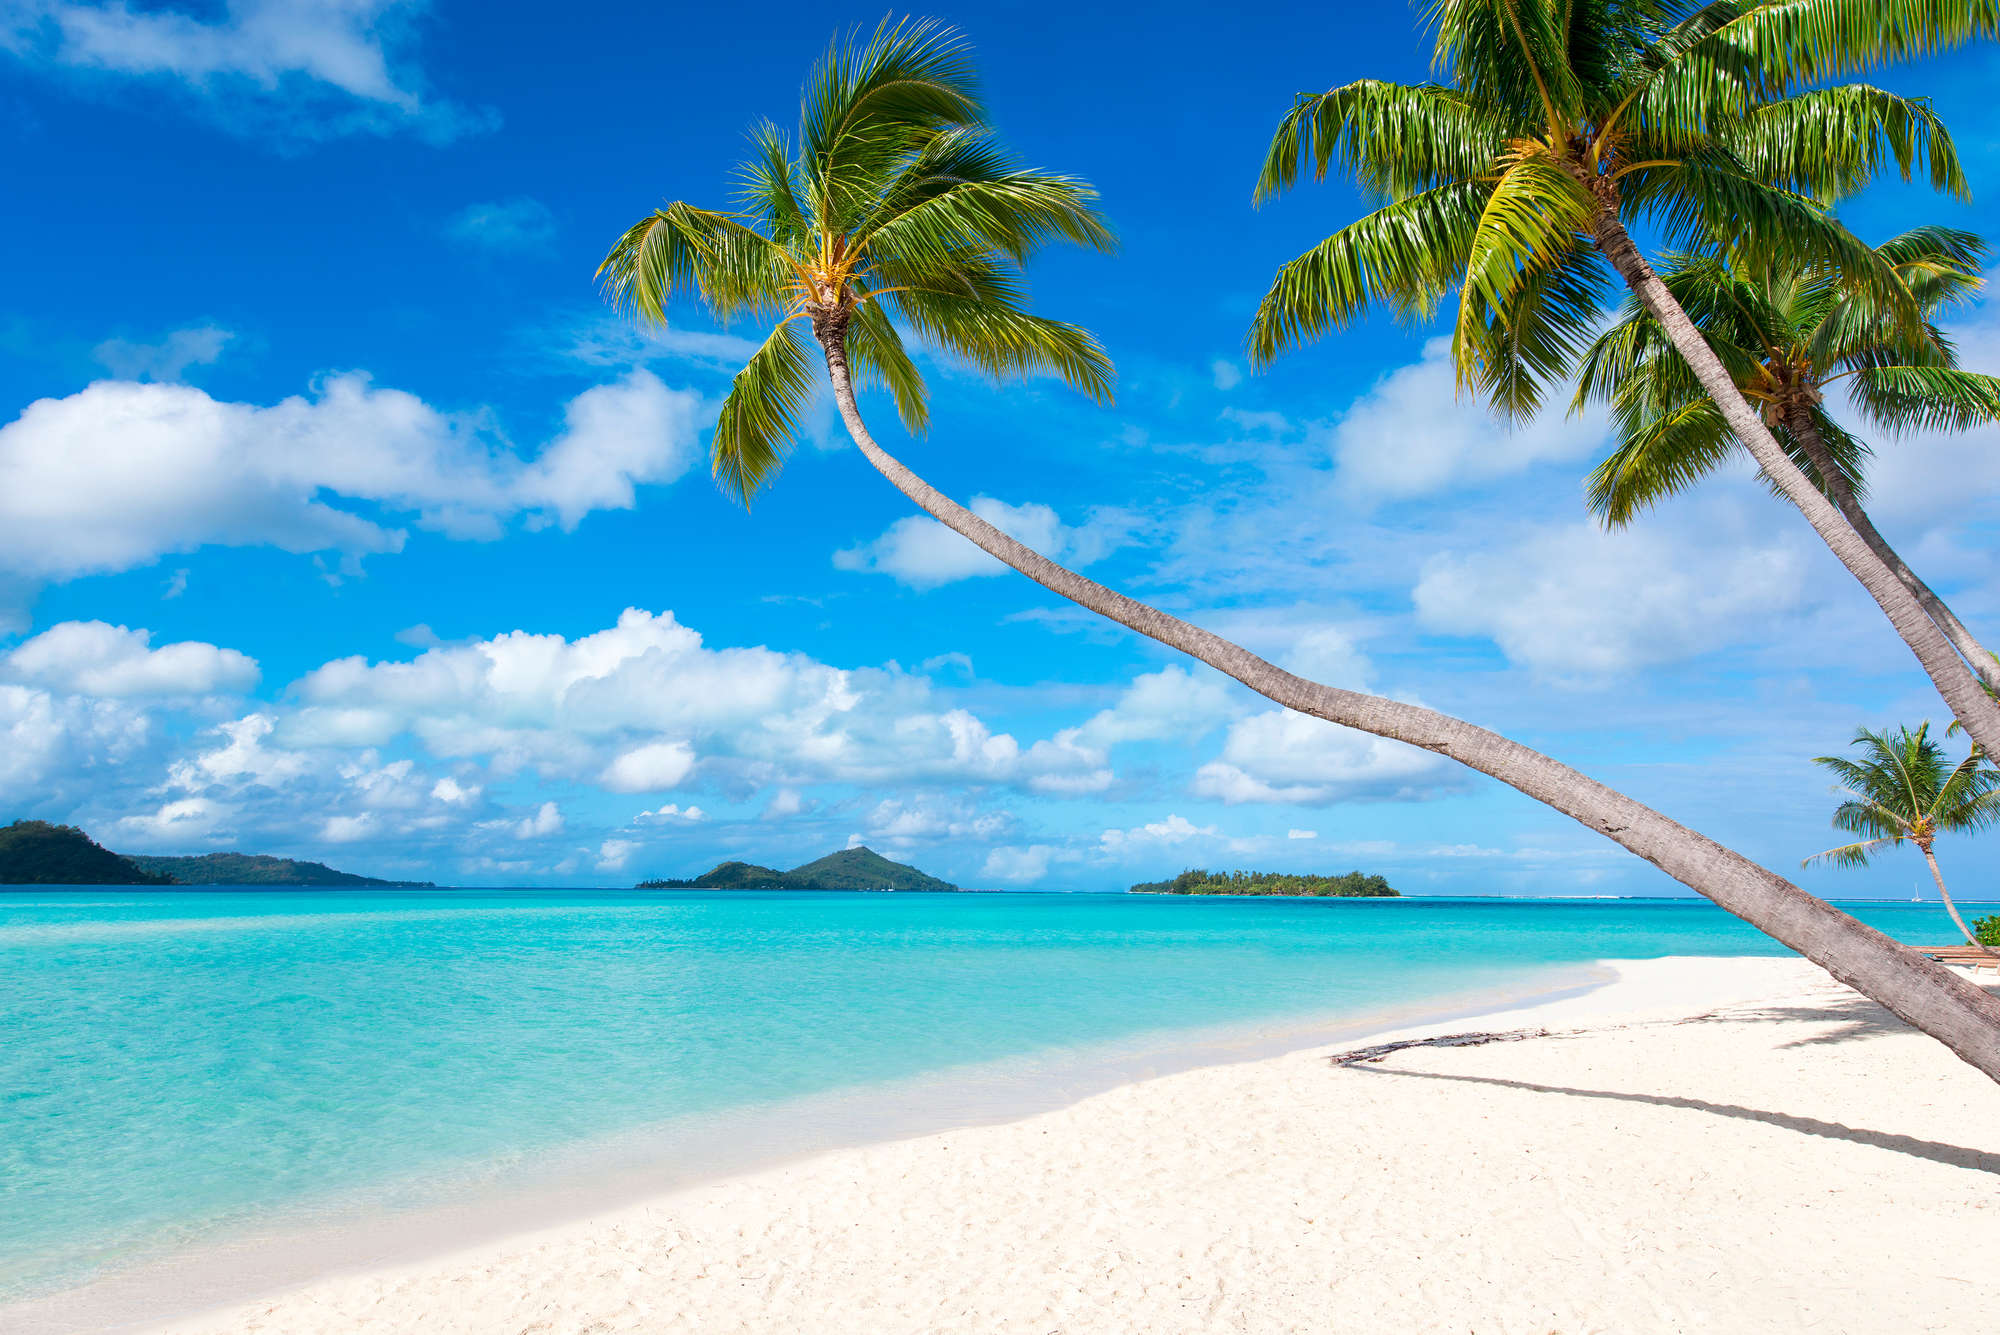             Strand Fototapete Palmen am Meer auf Premium Glattvlies
        